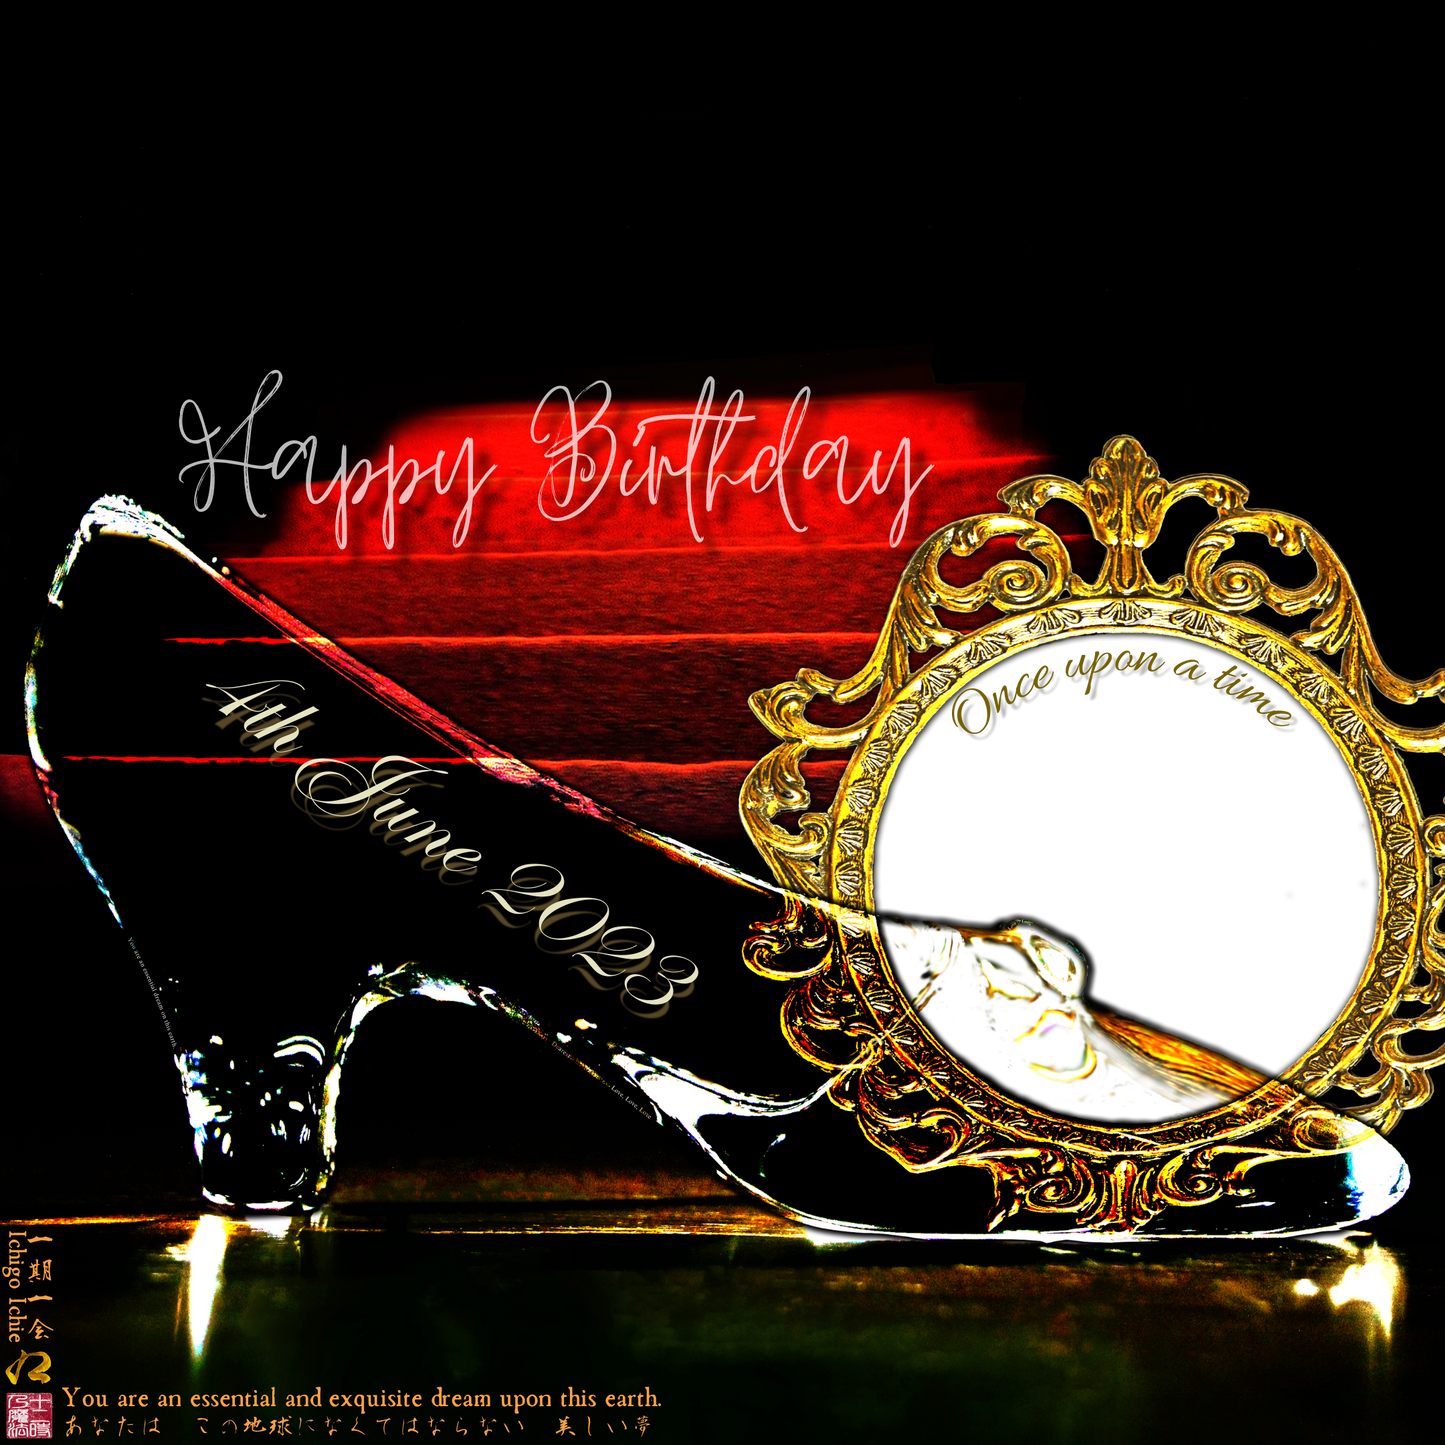 Happy Birthday Glass Slipper "Ichigo Ichie" 4th June 2023 the Right (1-of-1) NFT Art